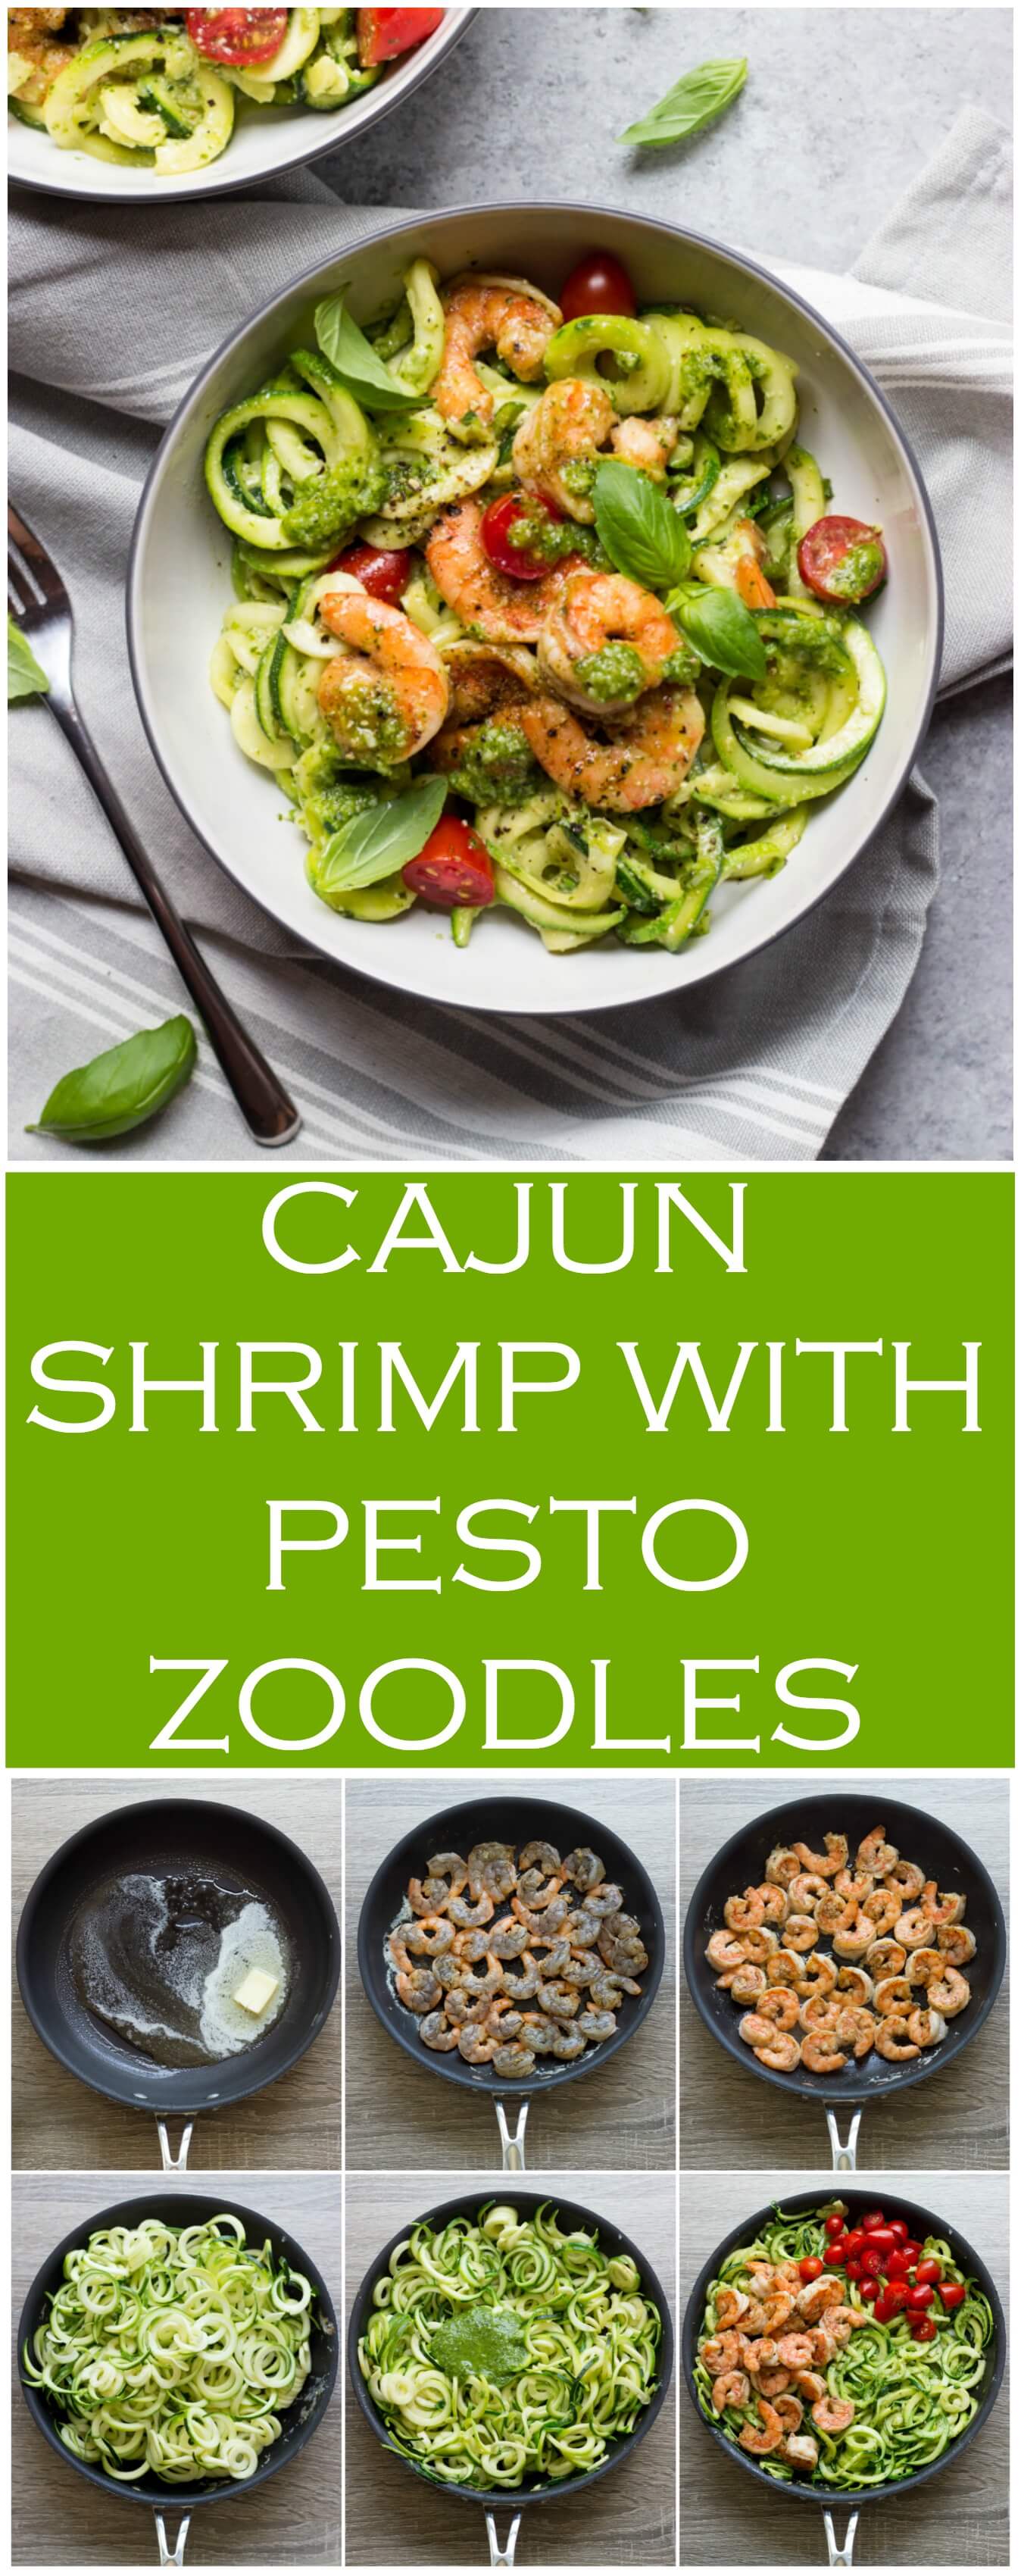 pesto zoodles with shrimp